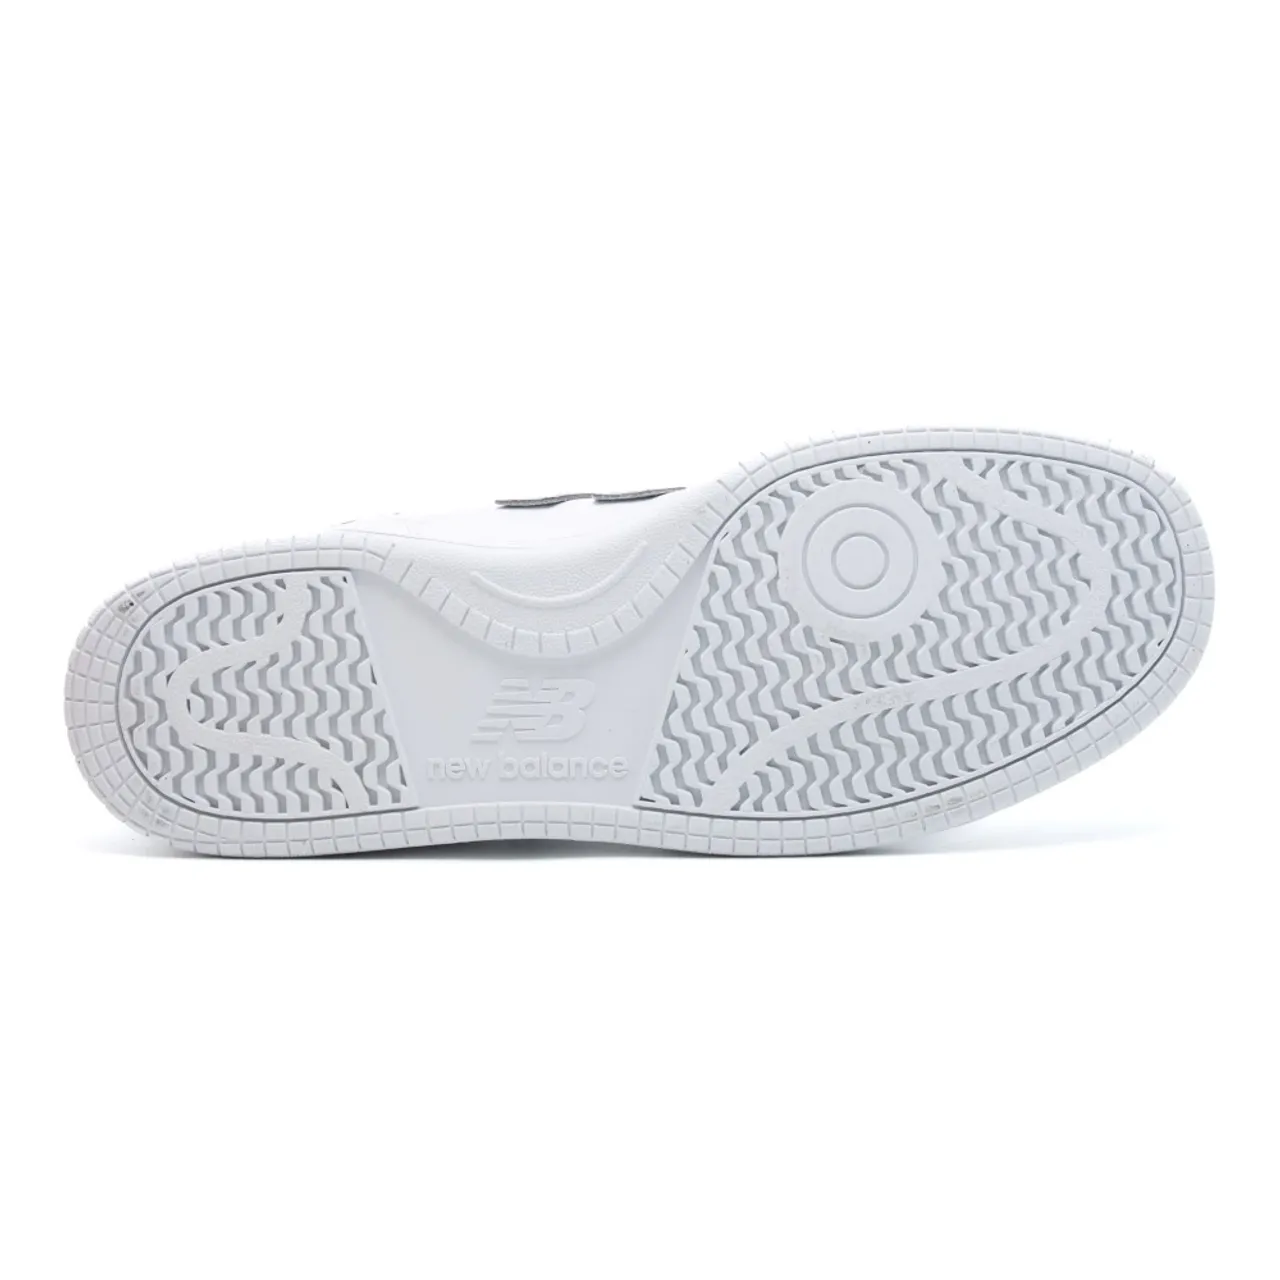 Weiße Leder Lifestyle Sneakers - LTZ New Balance